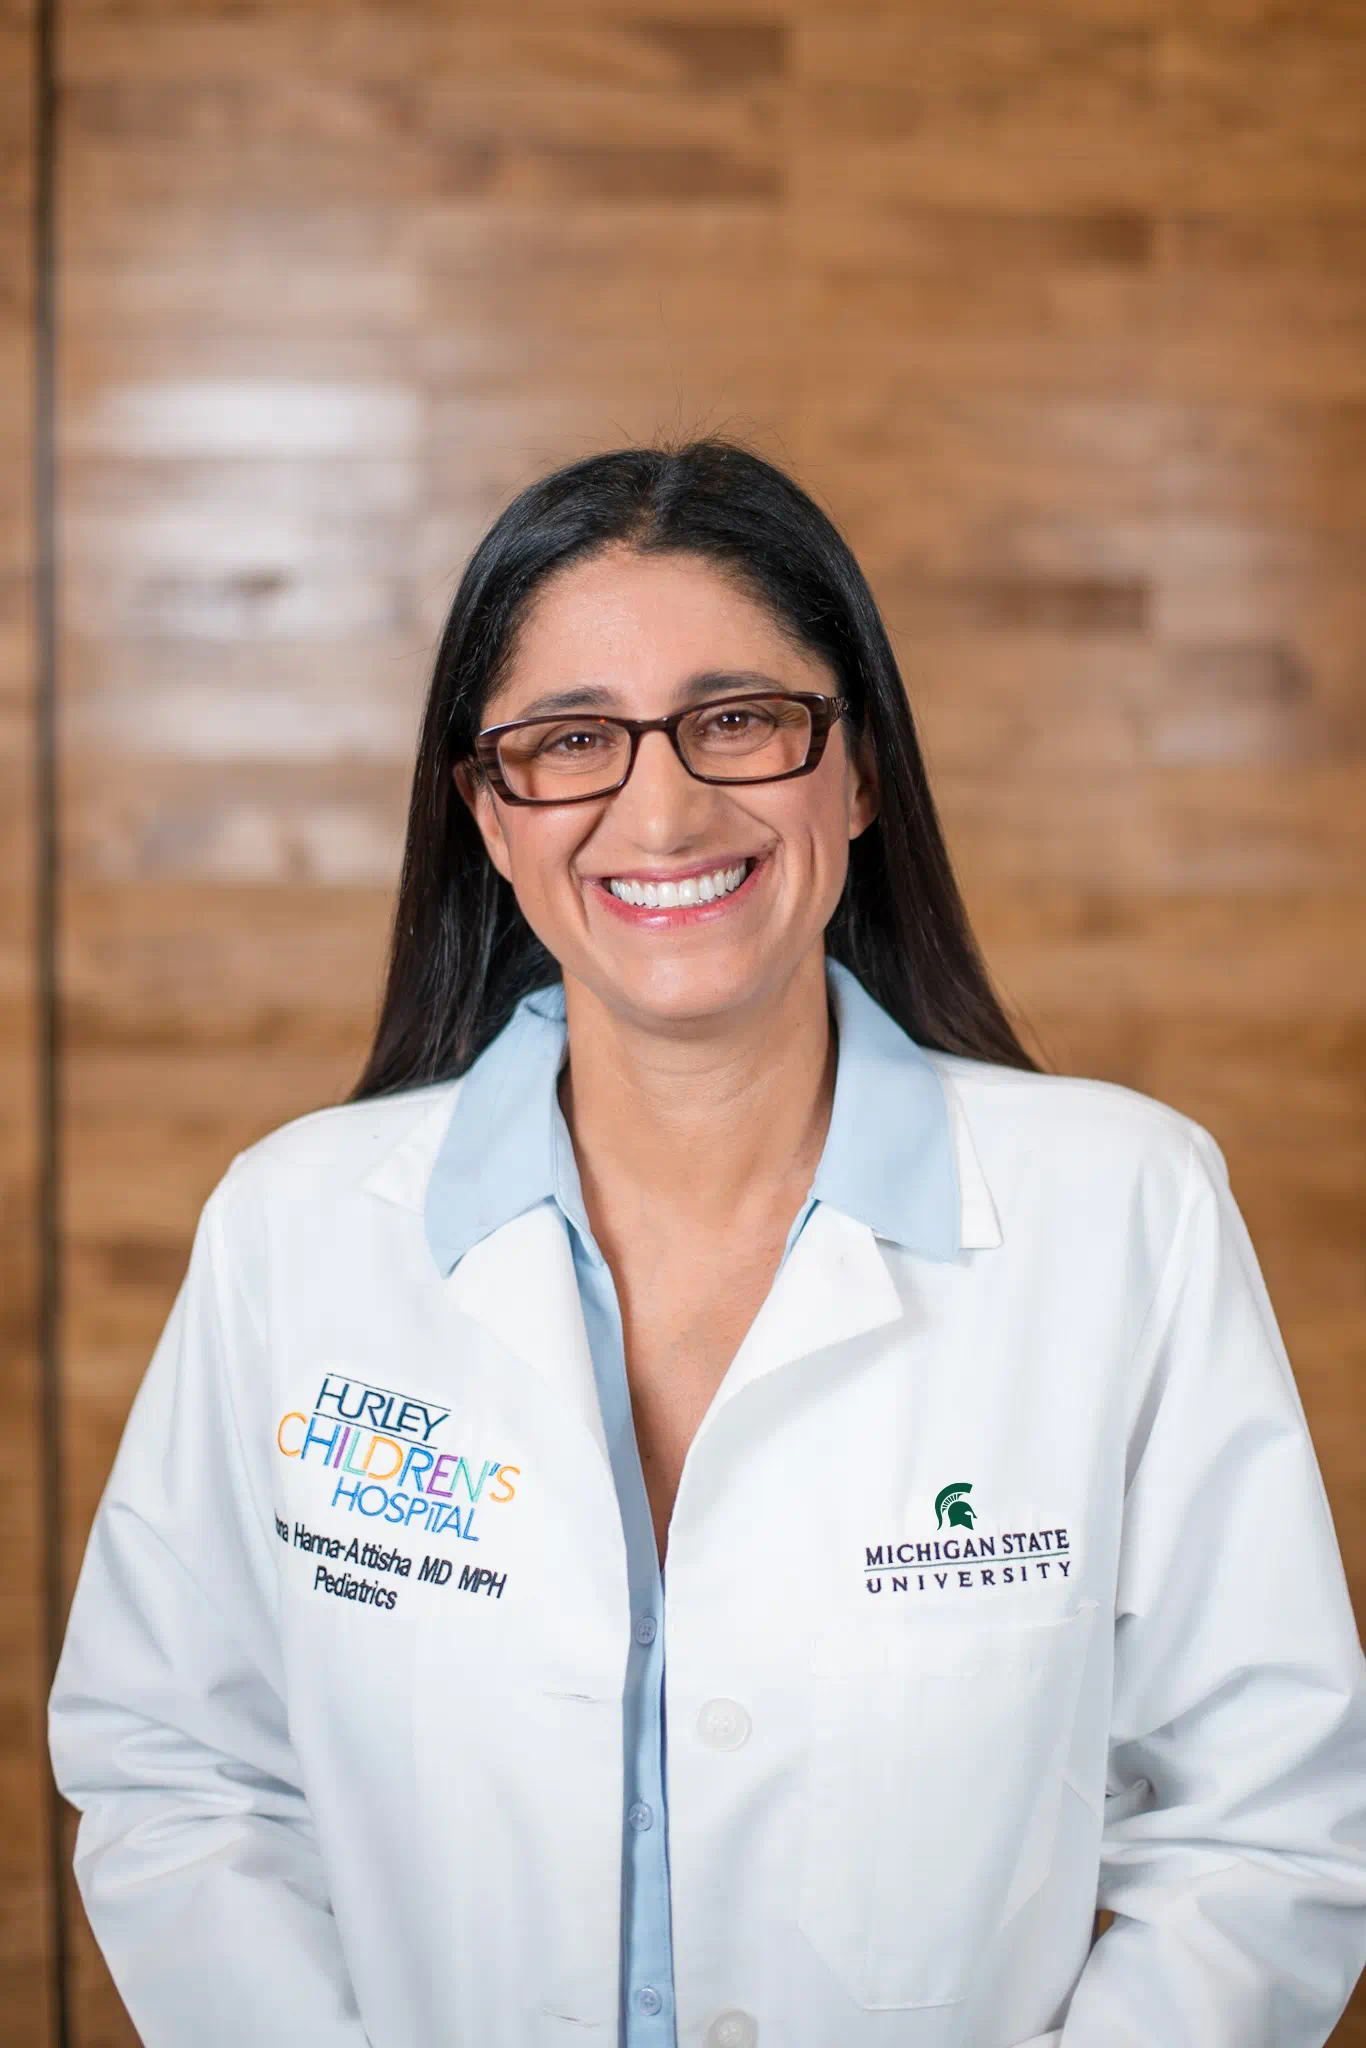 Dr. Mona Hanna-Attisha